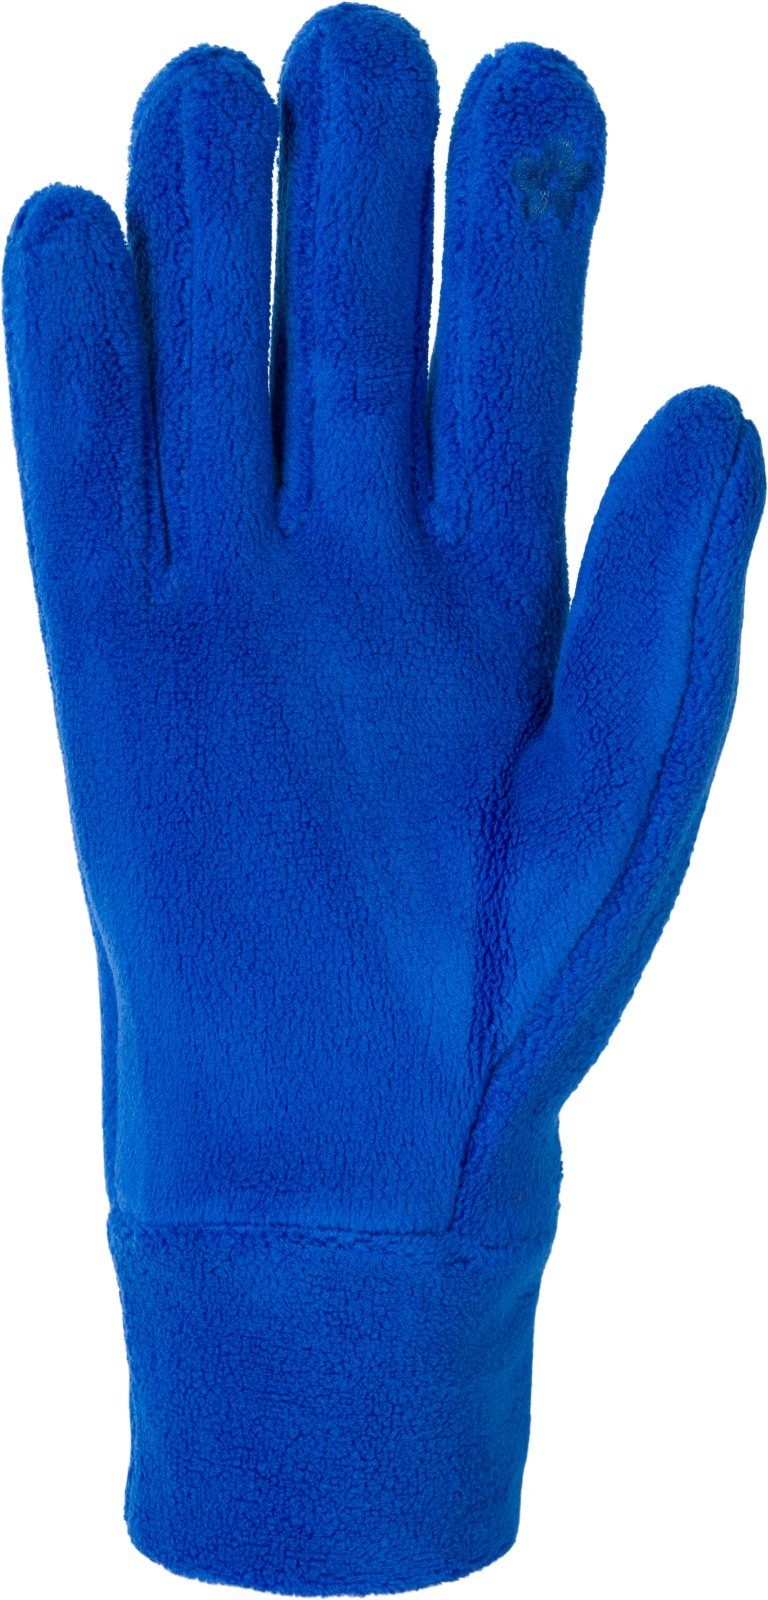 styleBREAKER Fleecehandschuhe Einfarbige Fleece Touchscreen Handschuhe Royalblau